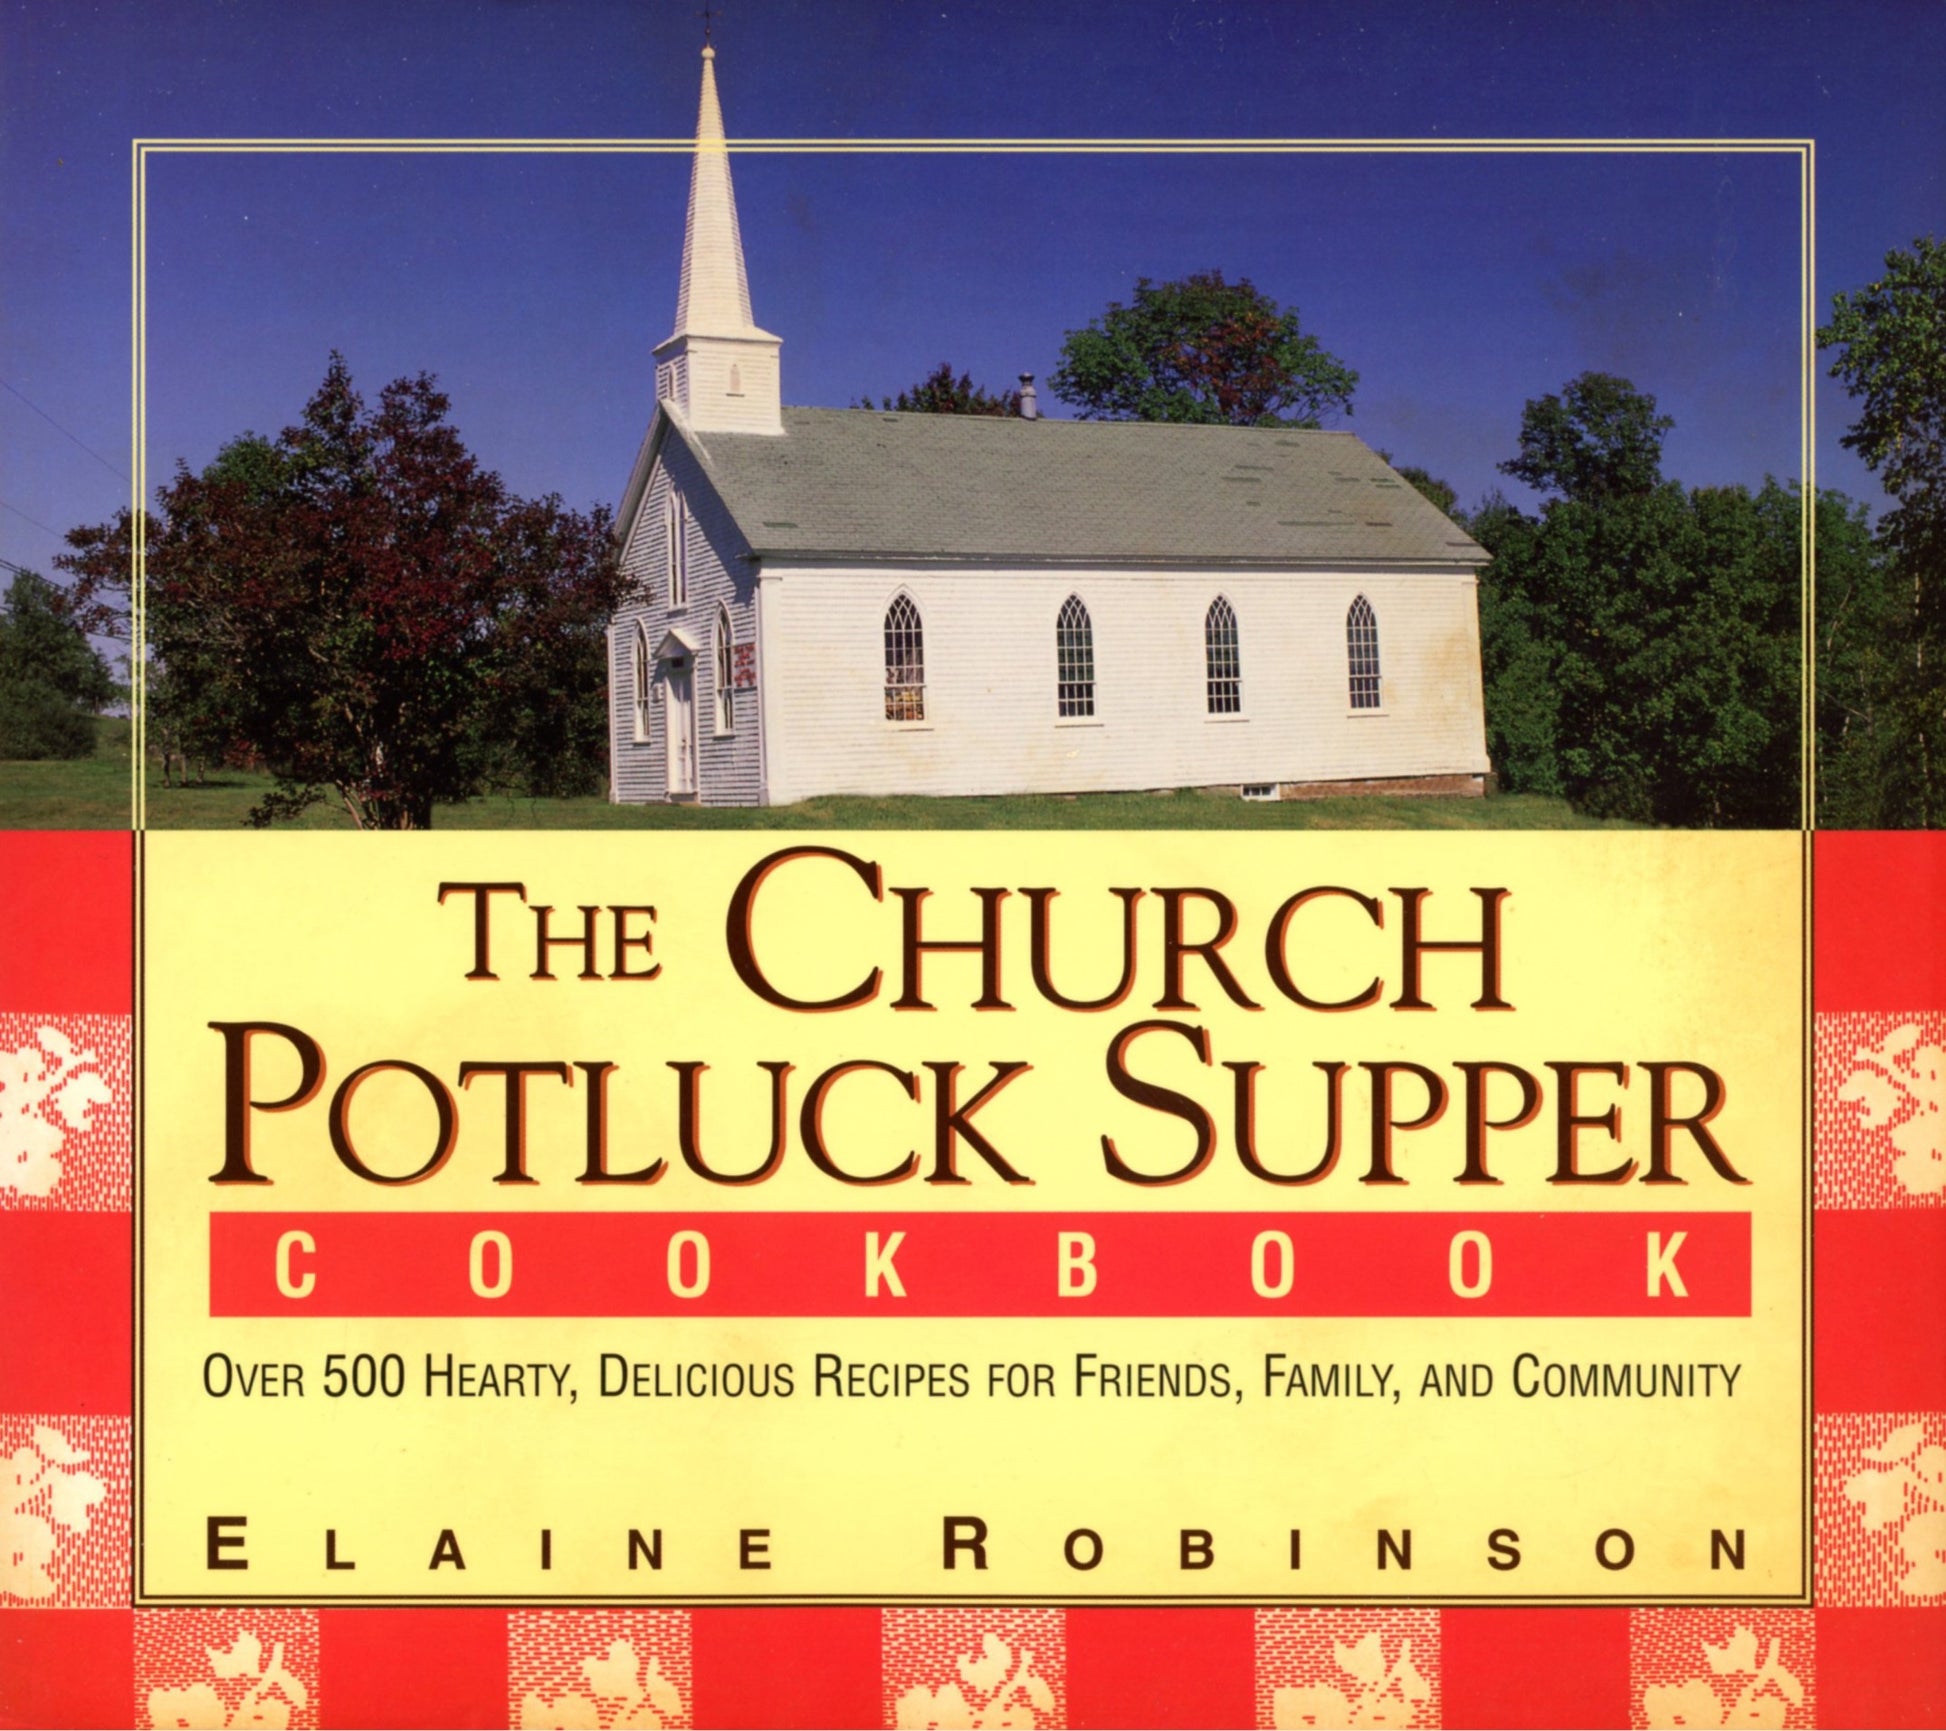 CHURCH POTLUCK SUPPER COOKBOOK by Elaine Robinson ©2003